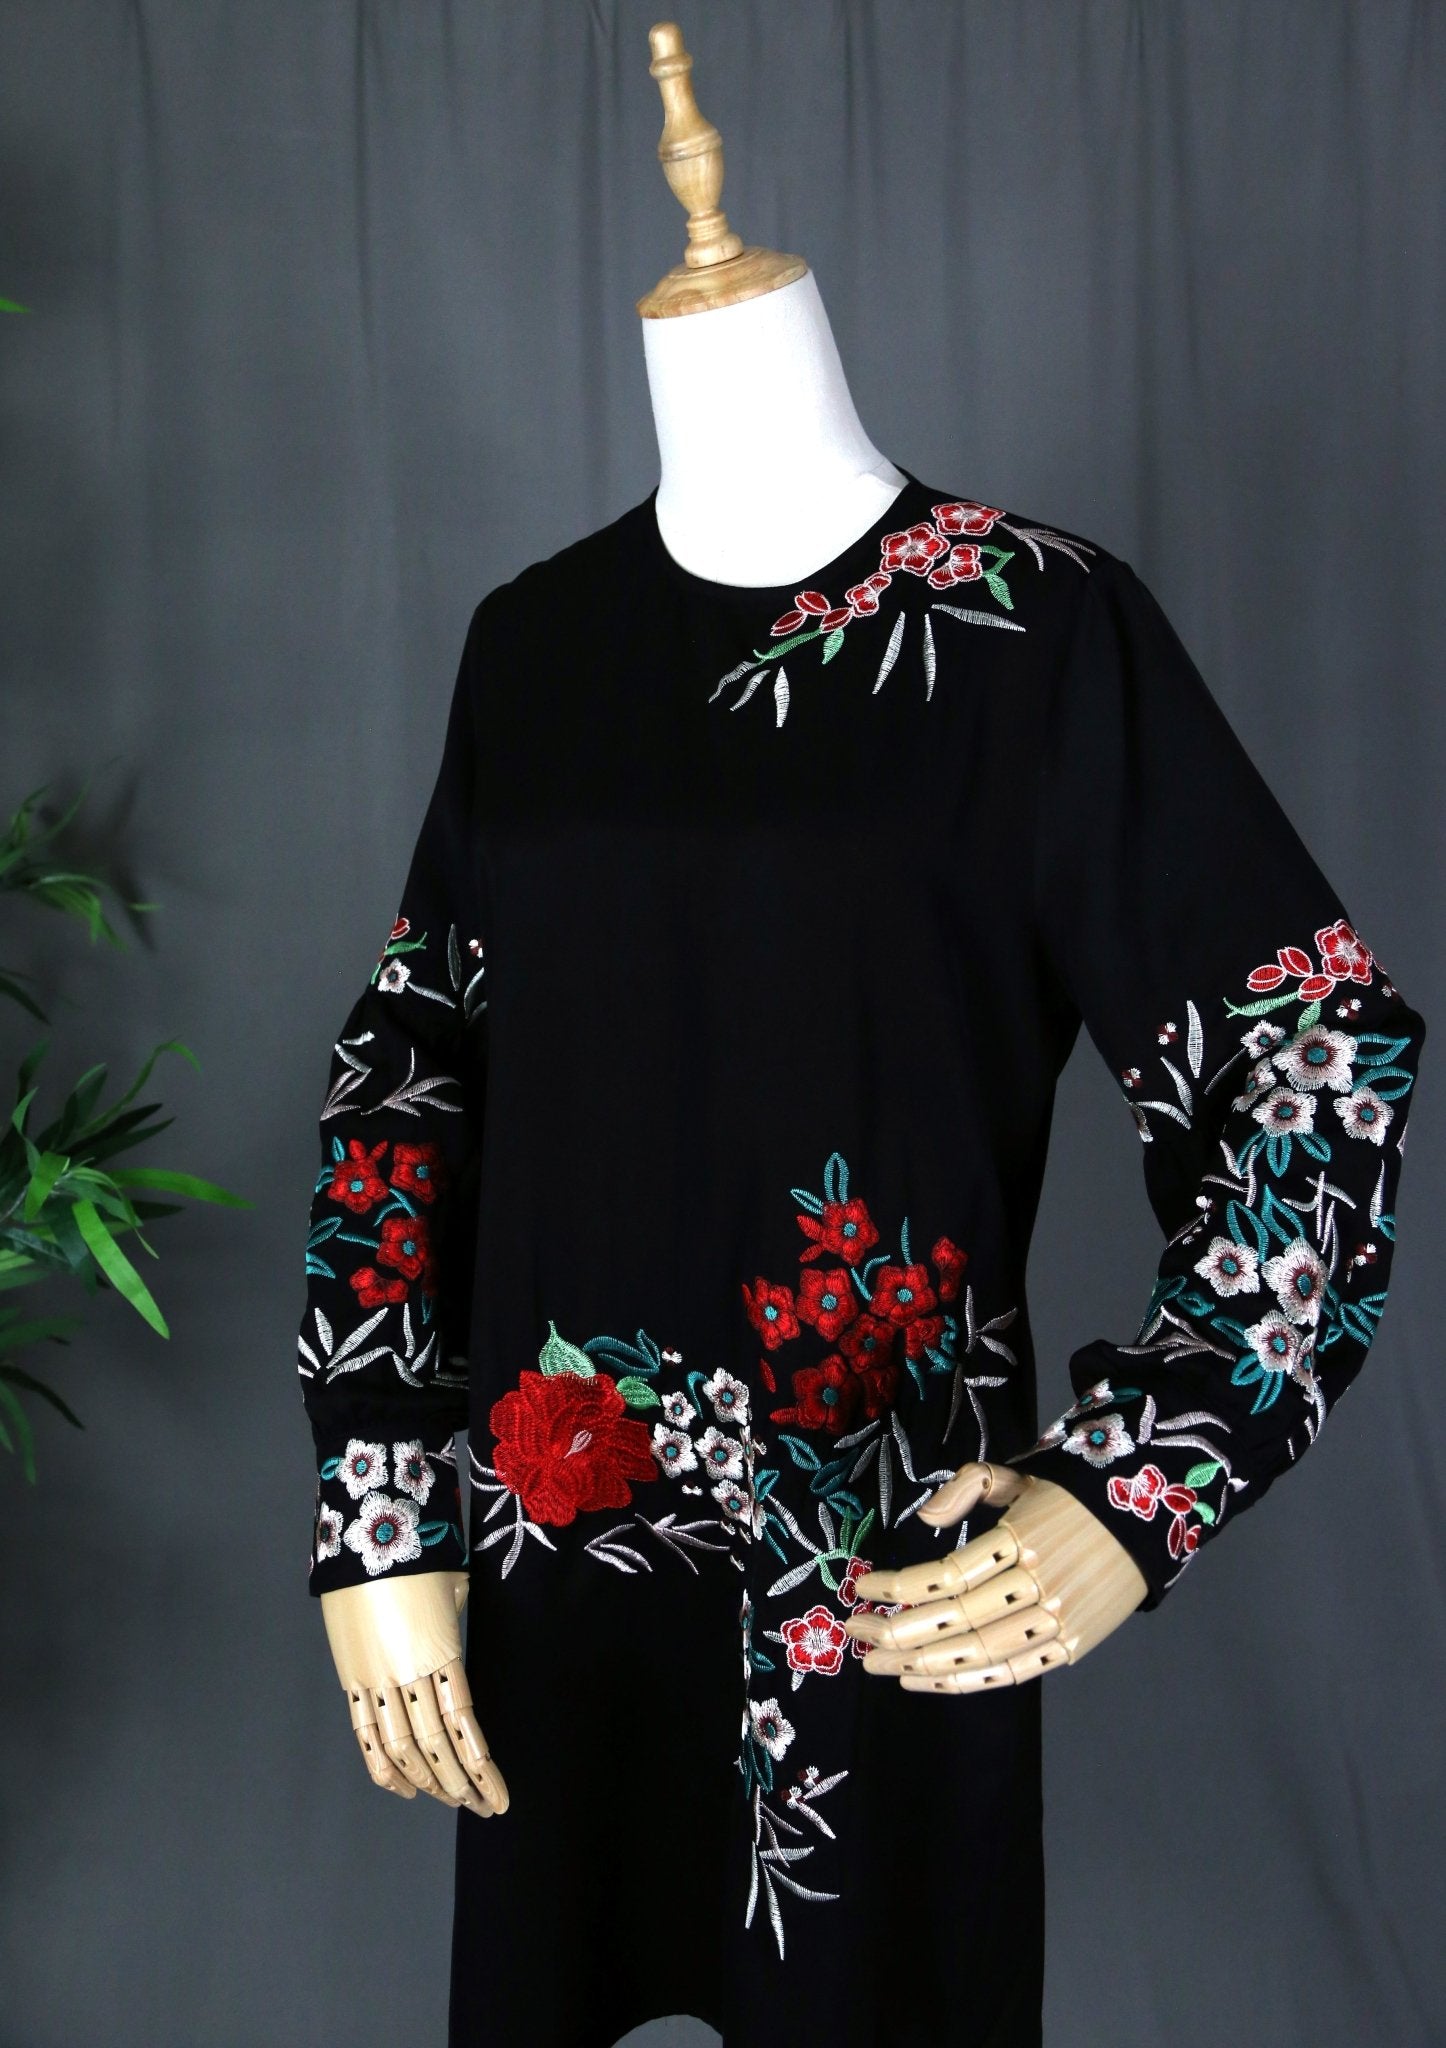 Embroidered flower tee shirt Women Project X Paris - Black